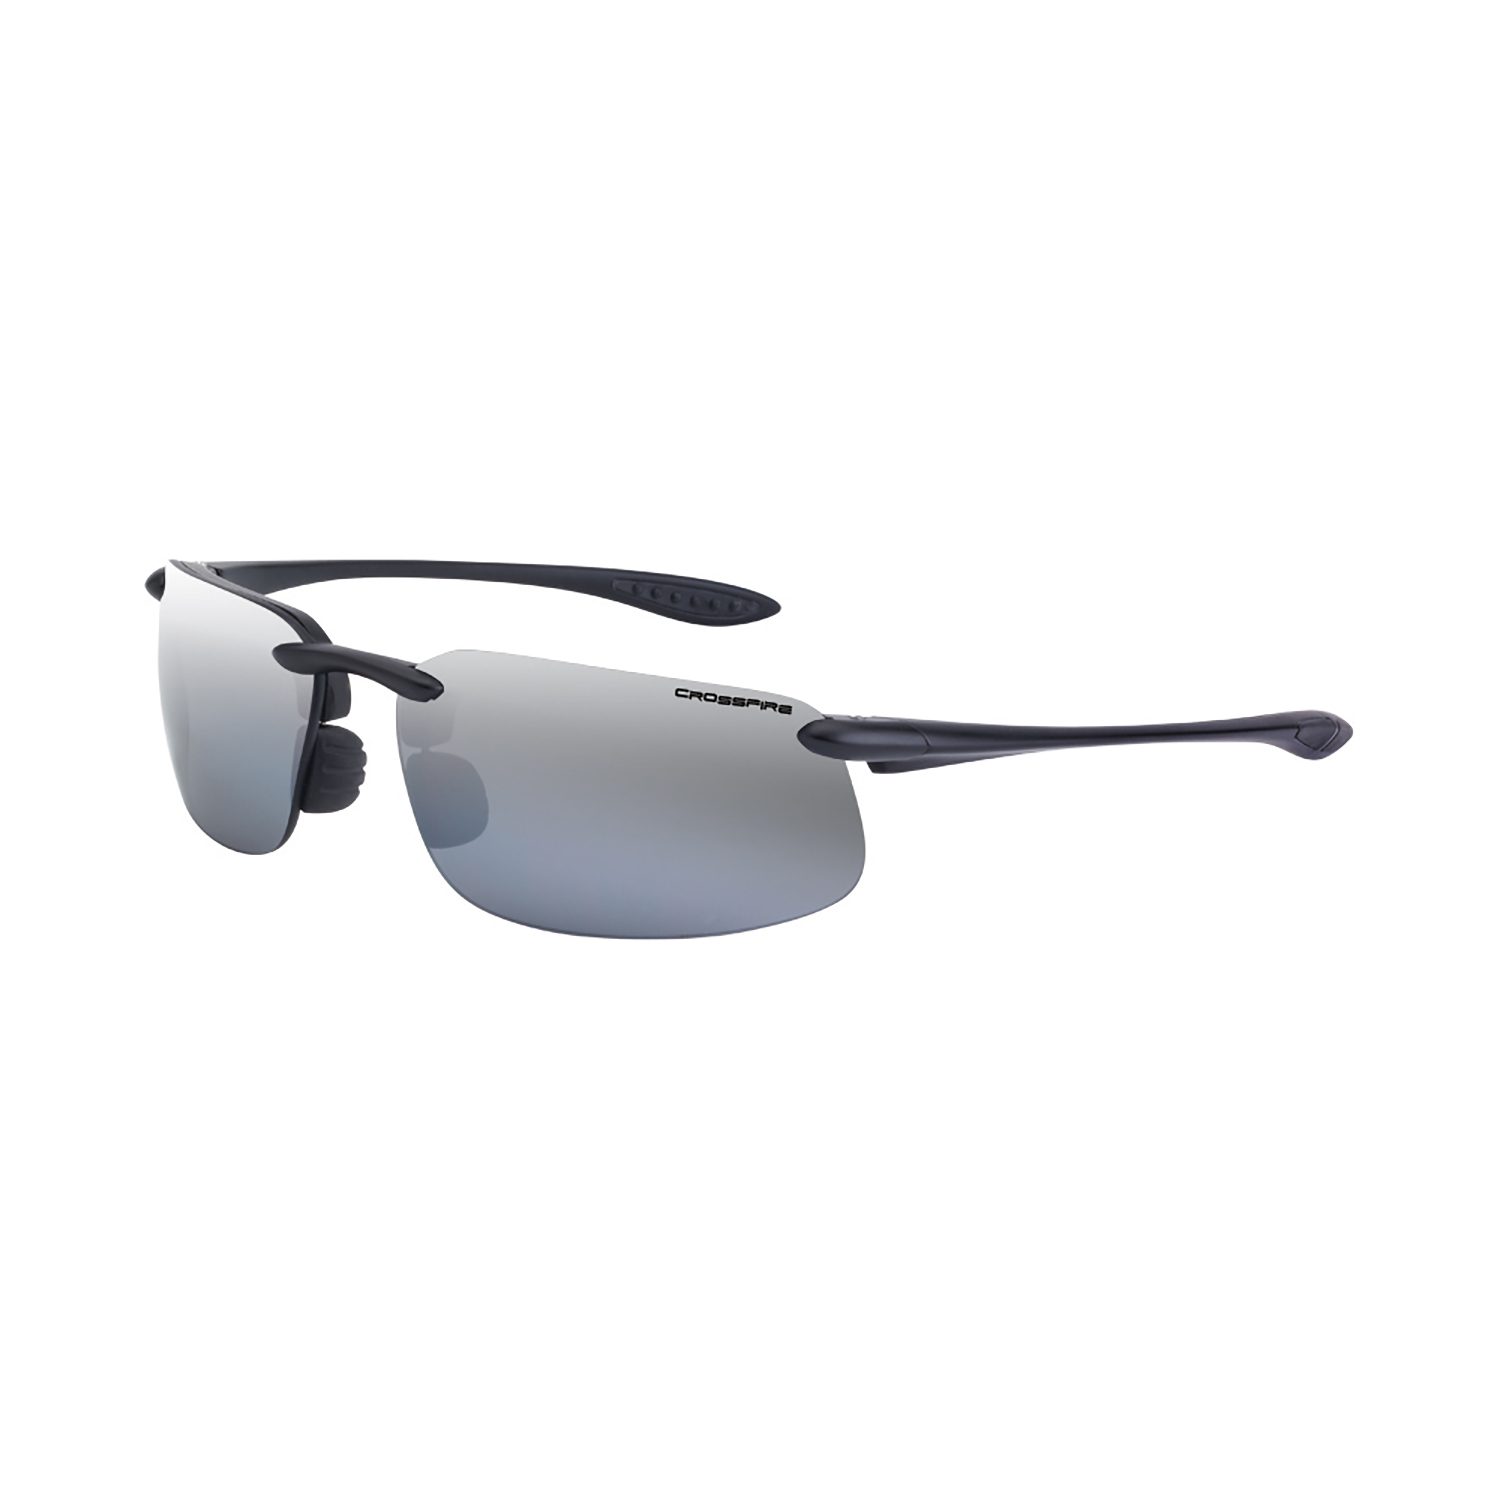 ES4 Premium Safety Eyewear - Shiny Black Frame - Silver Mirror Lens